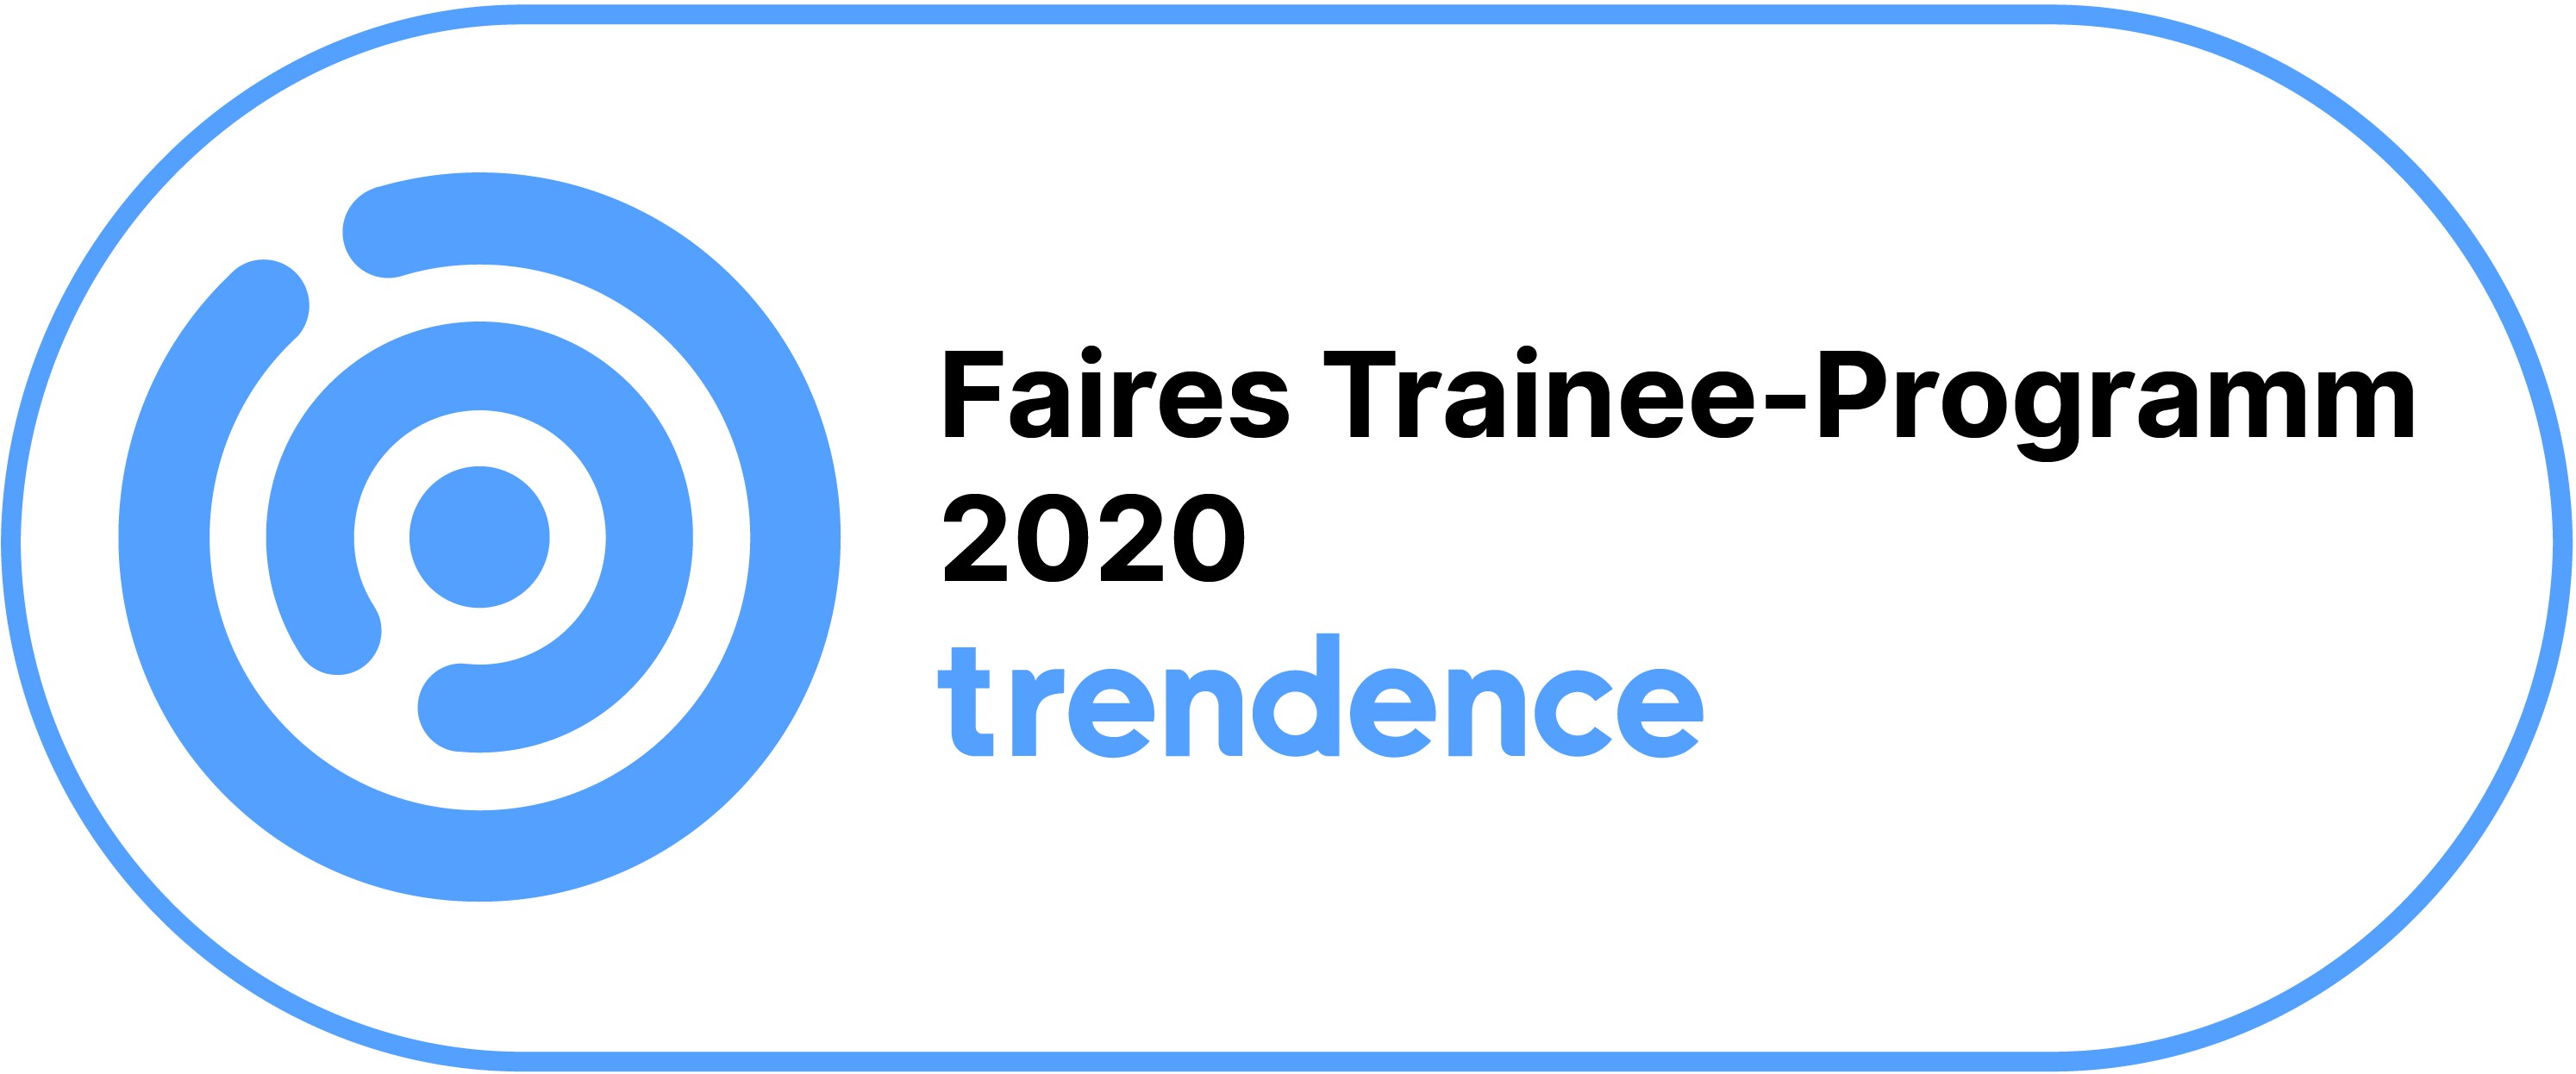 Award: Faires Trainee-Programm 2020